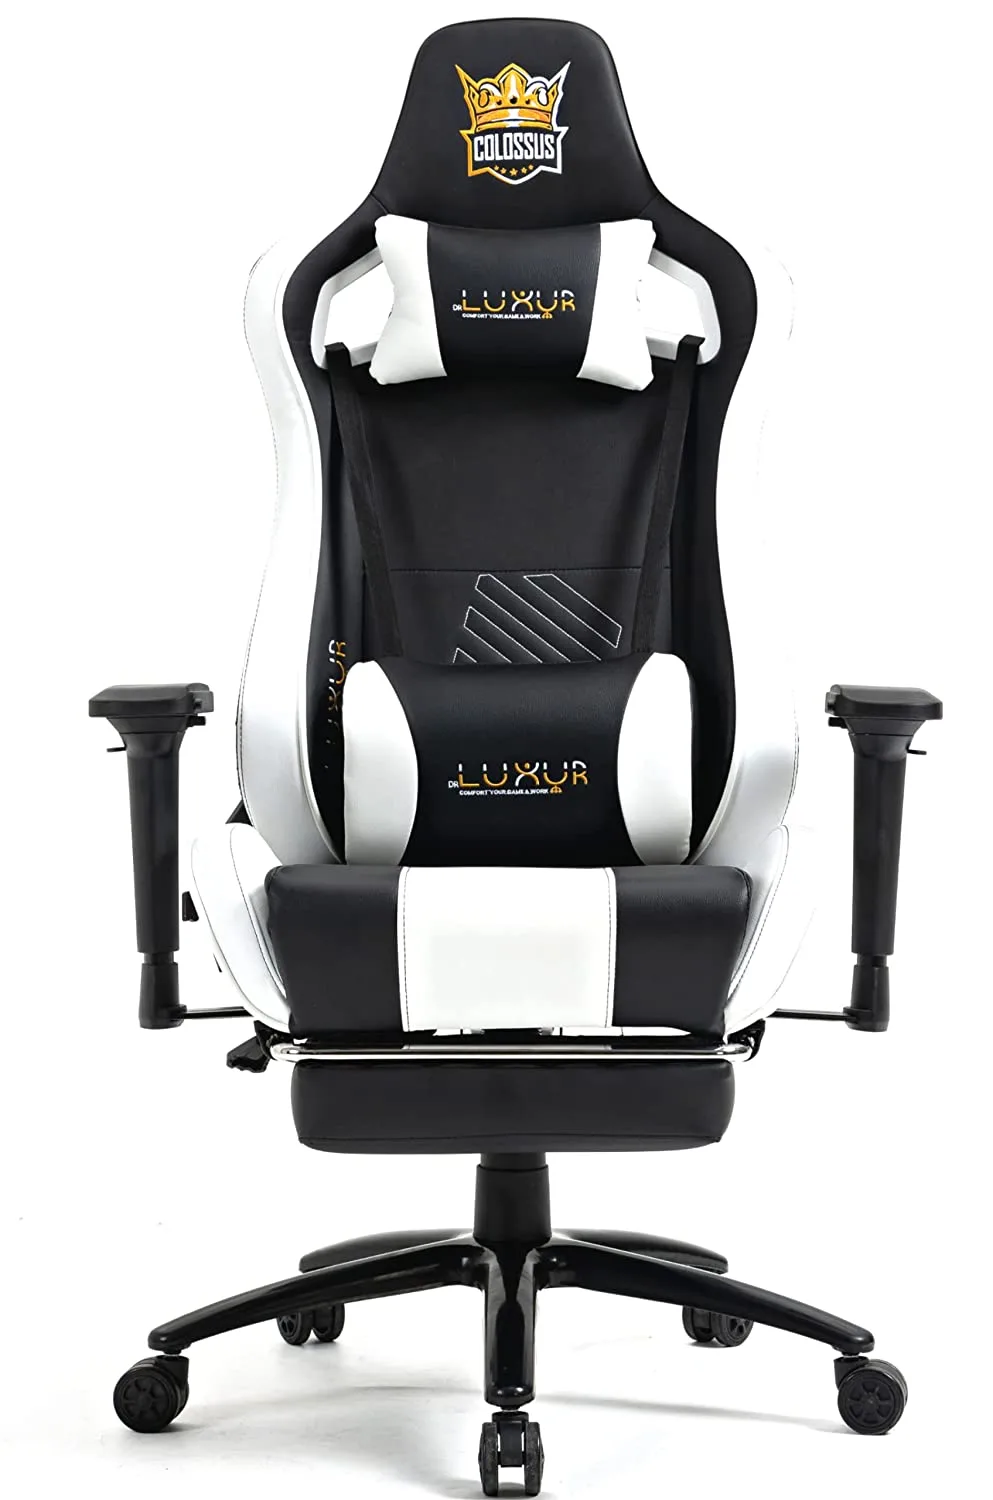 Dr. Luxur Colossus Ergonomic Gaming Chair